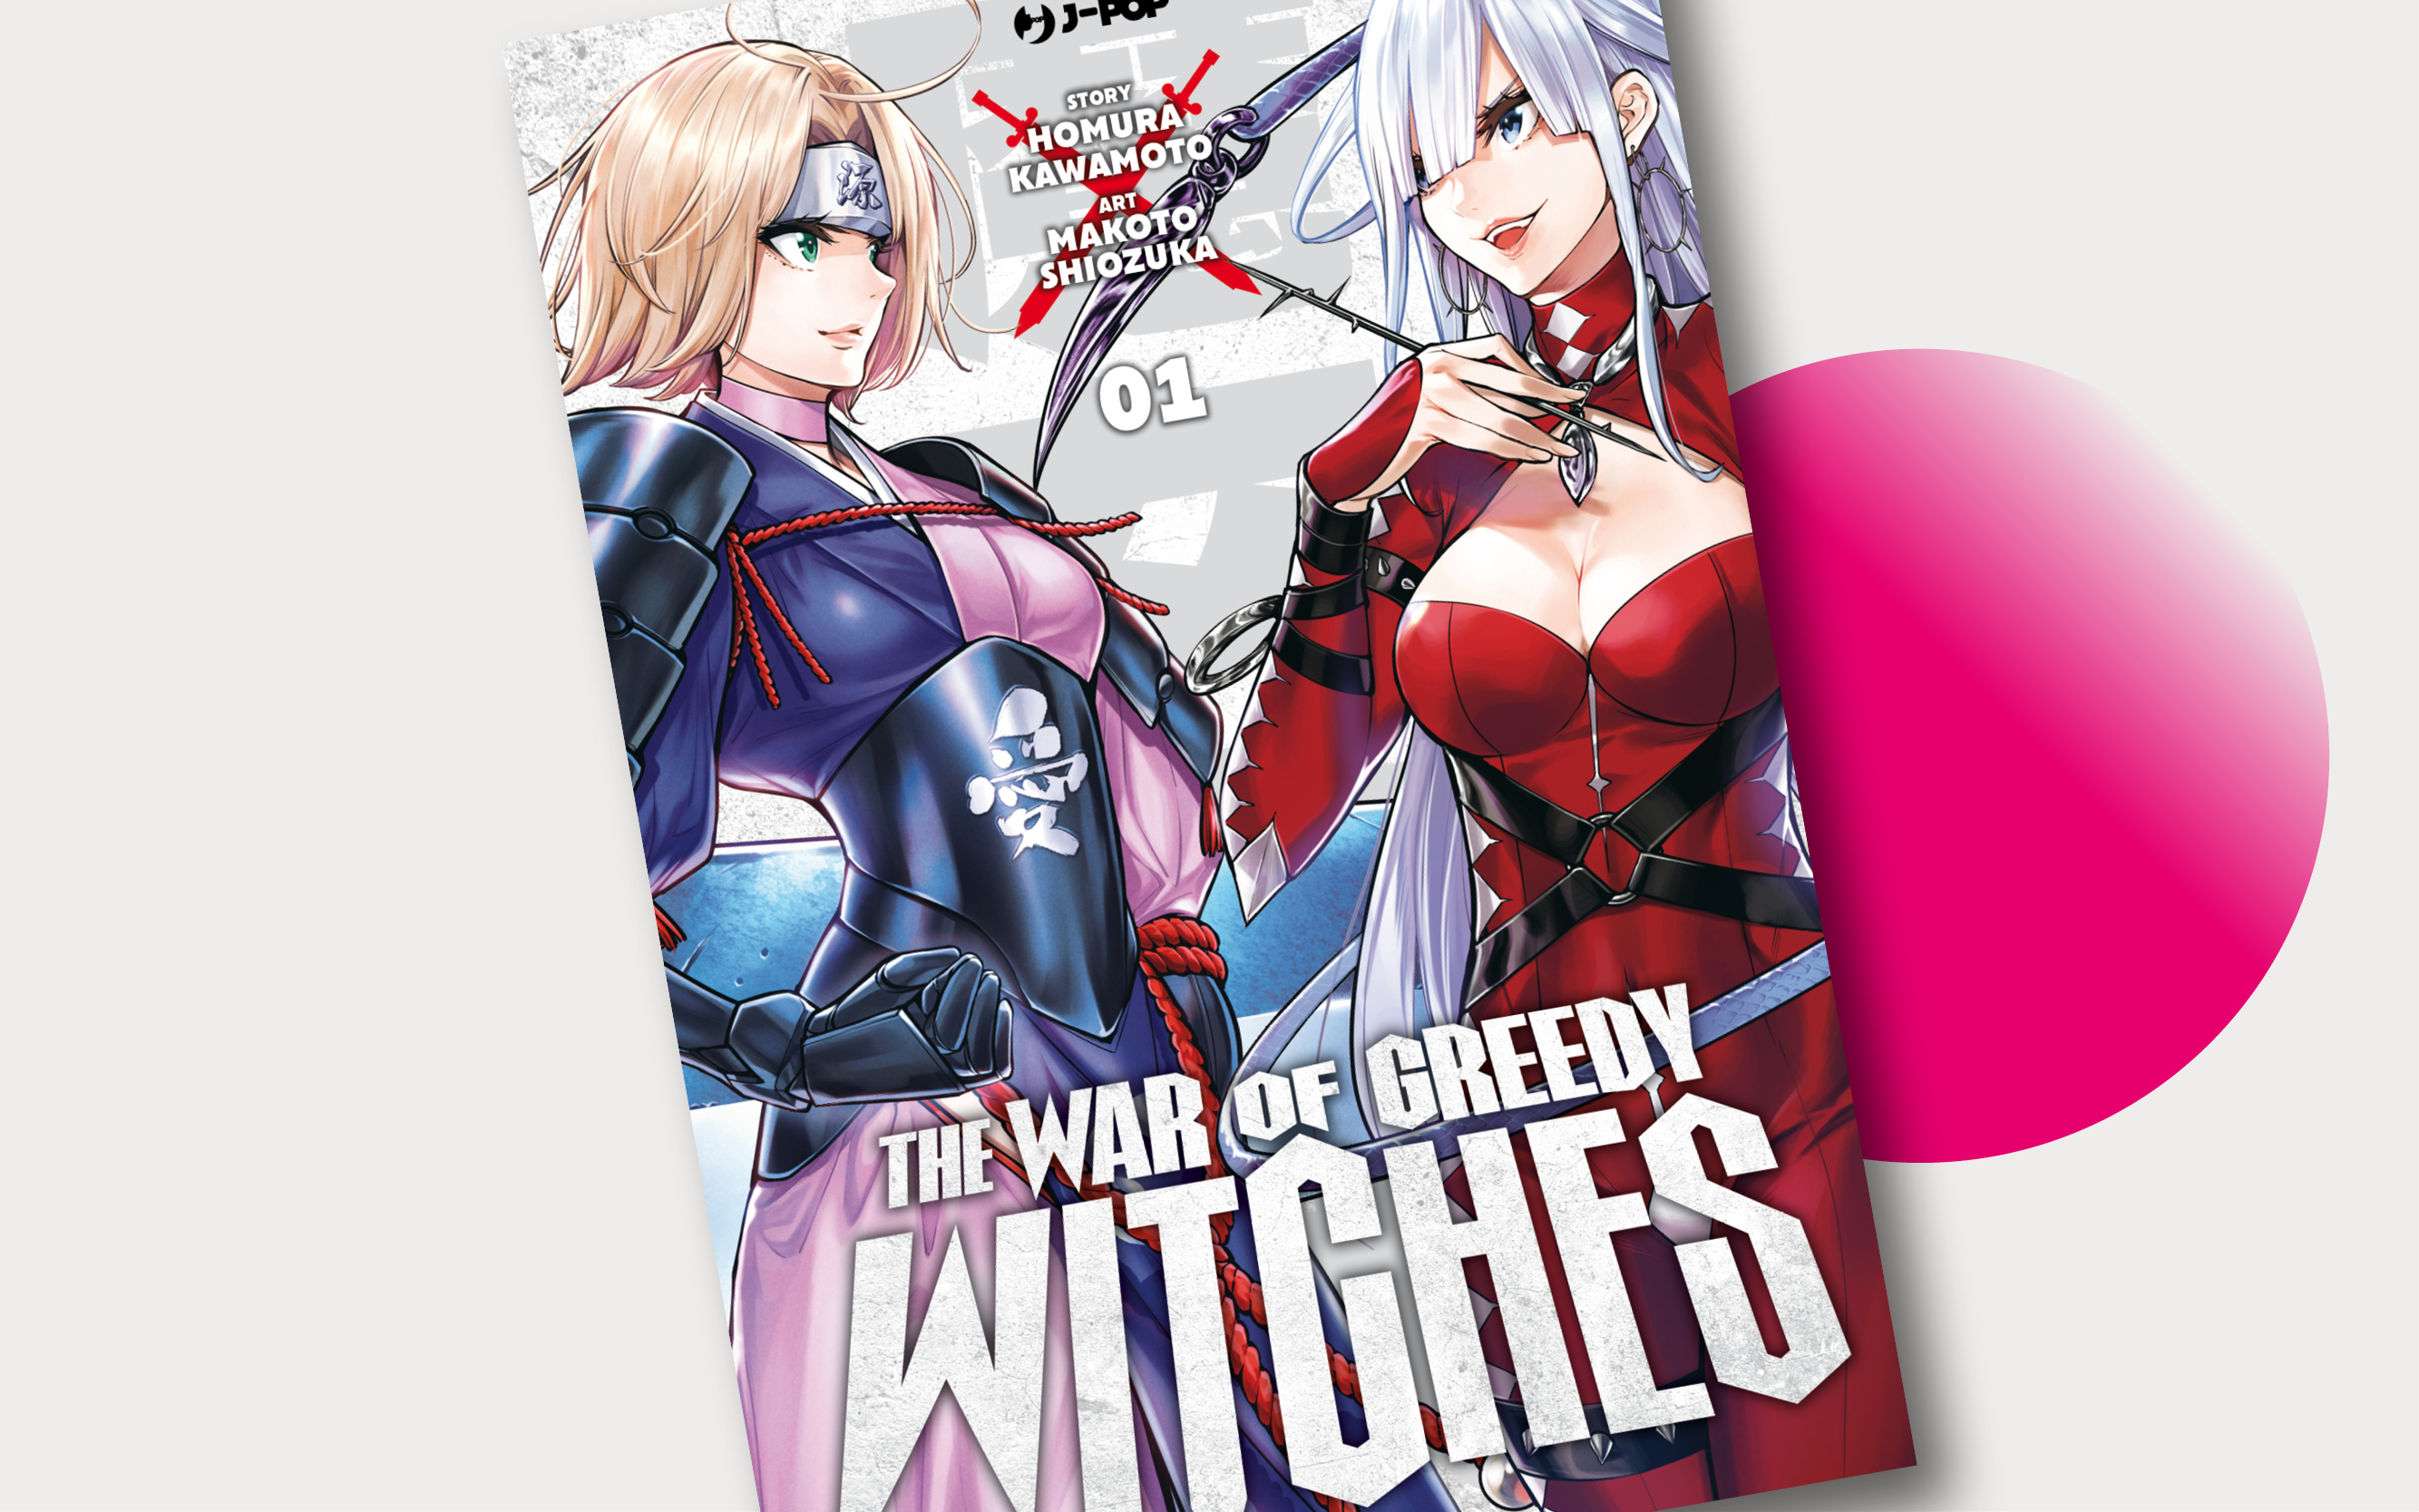 J-POP Manga presenta The War Of Greedy Witches 1  di Homura Kawamoto e Makoto Shiozuka